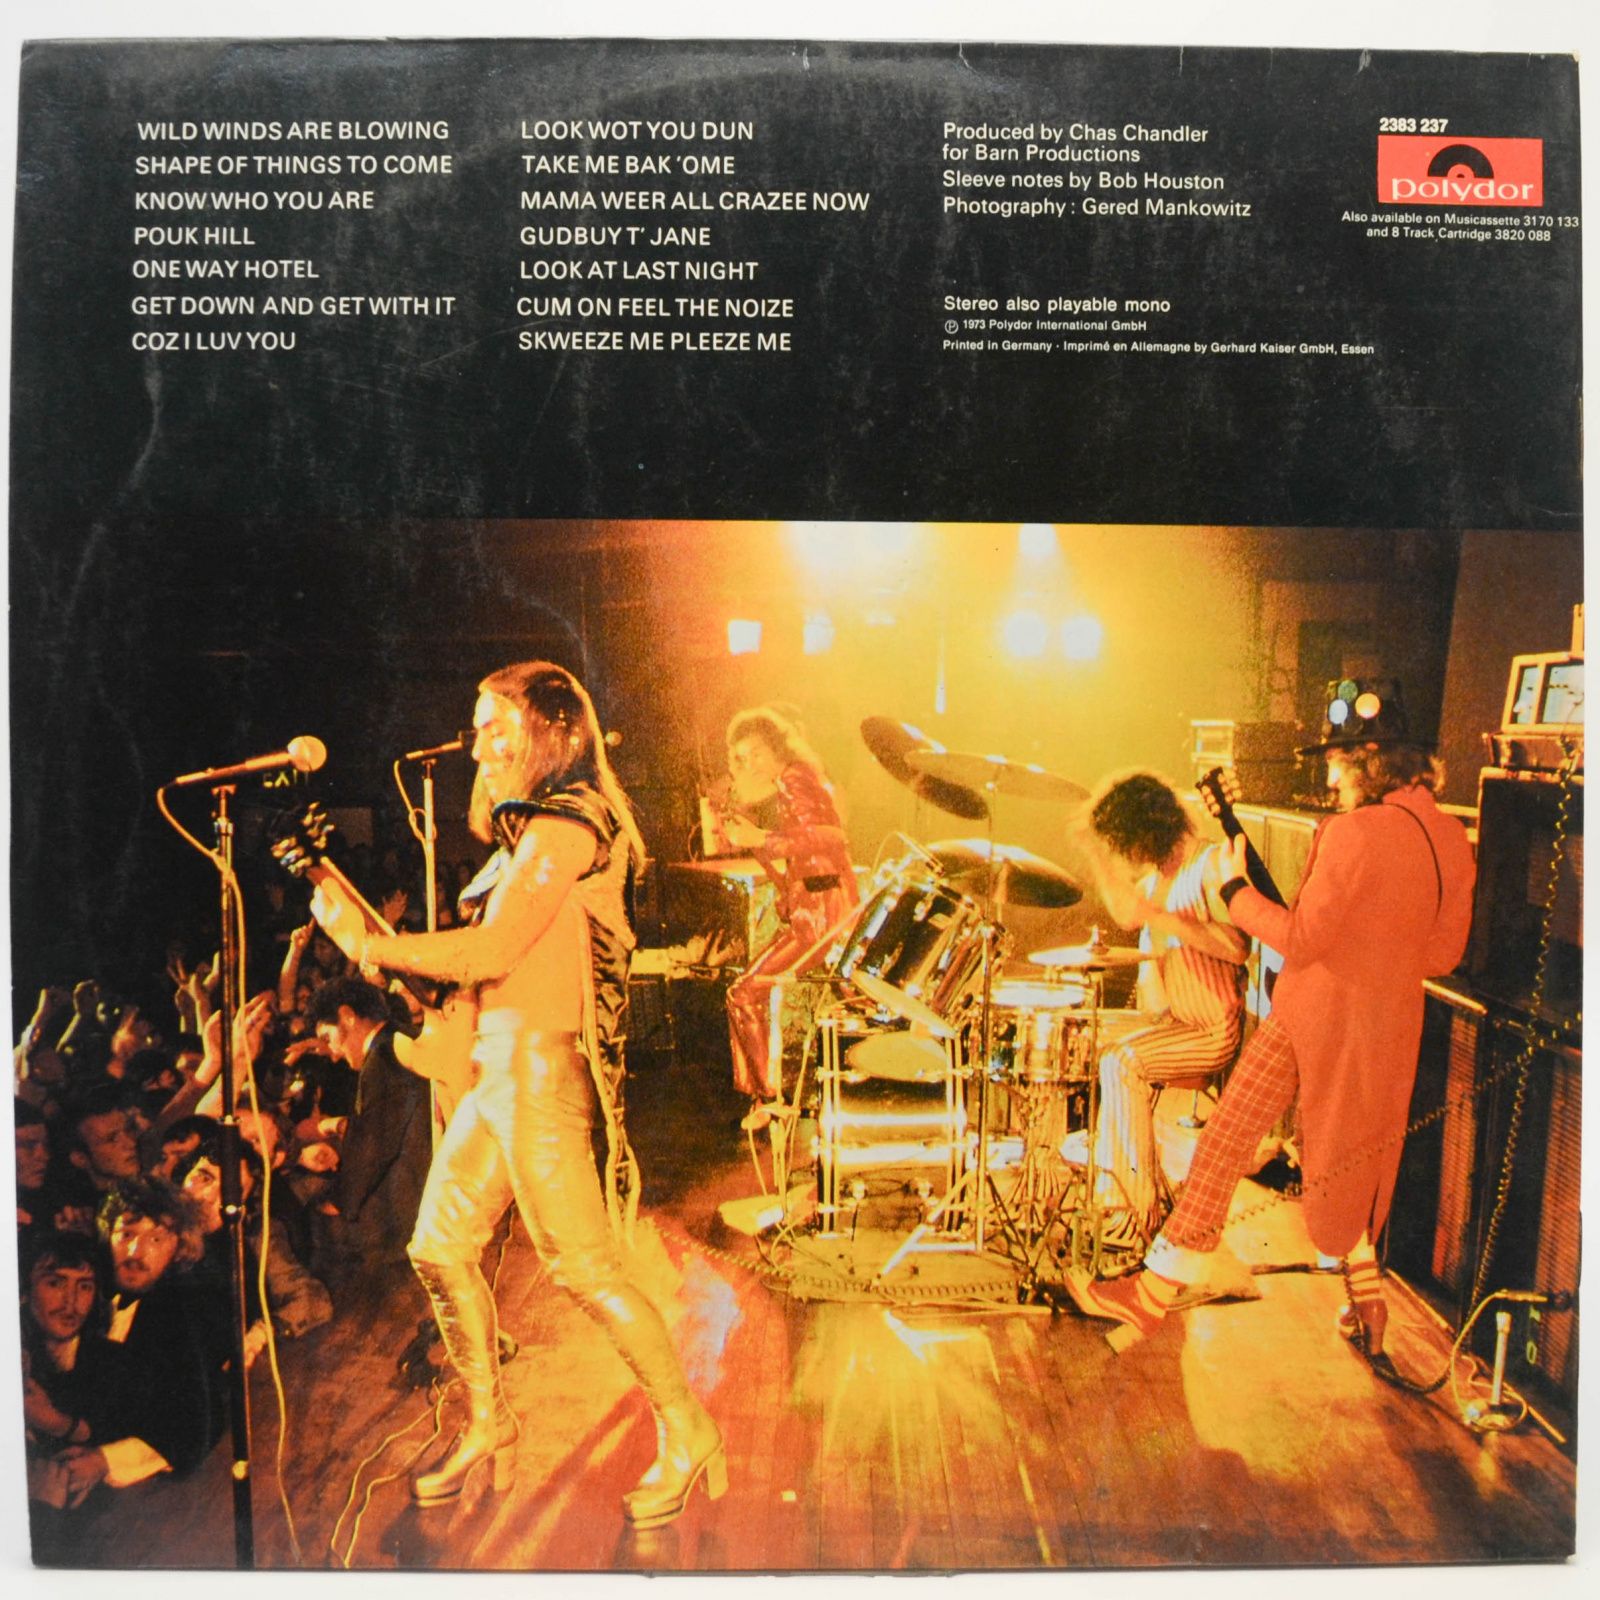 Slade — Sladest, 1973